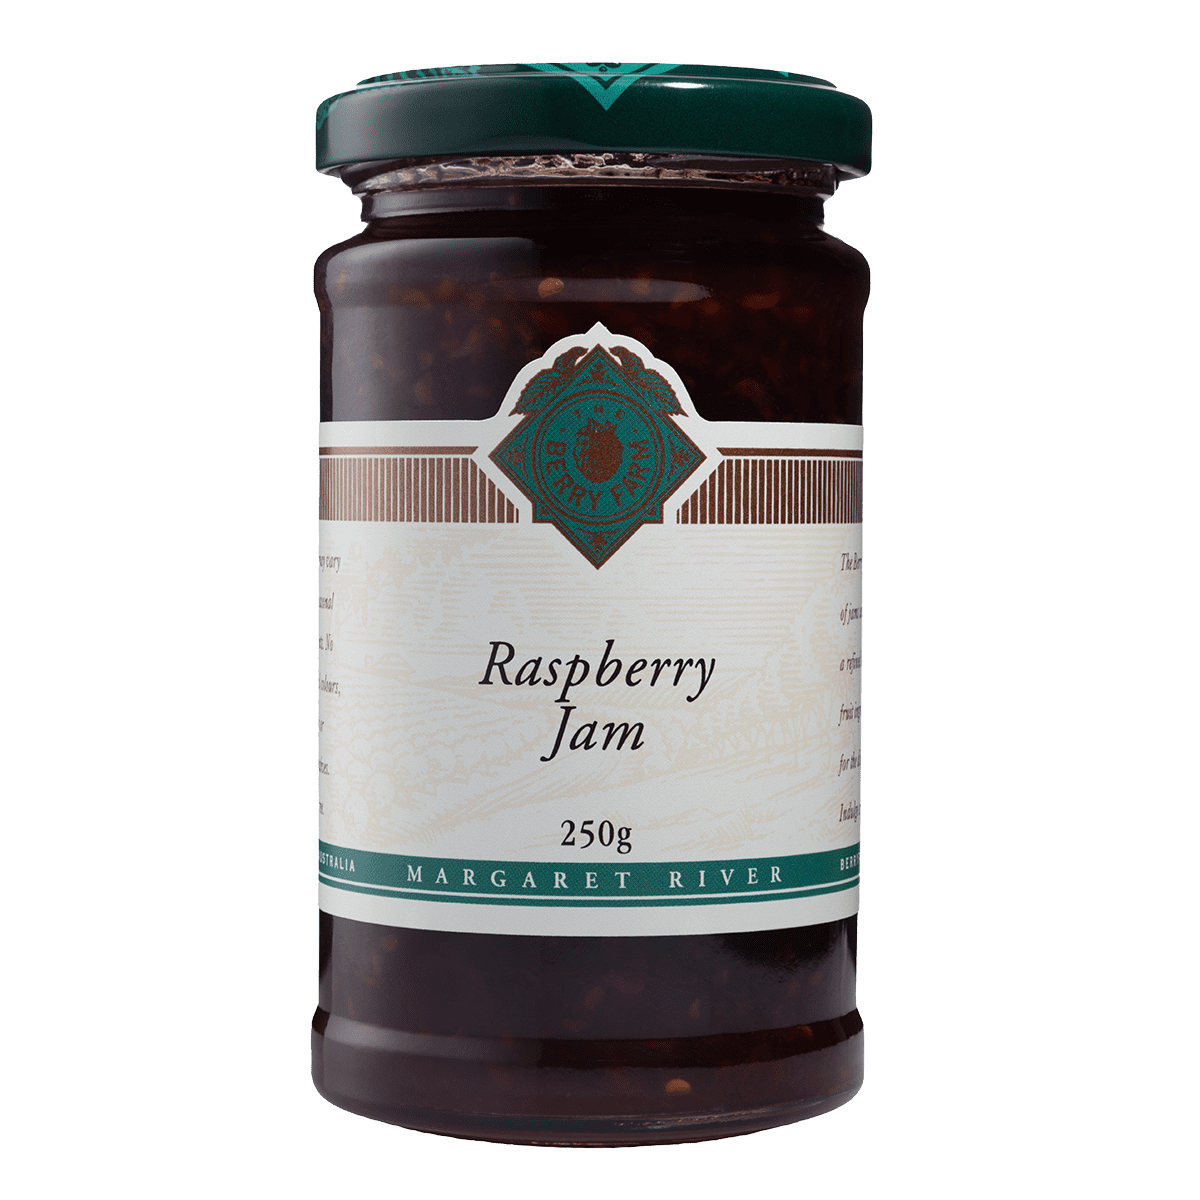 A jar of Raspberry Jam